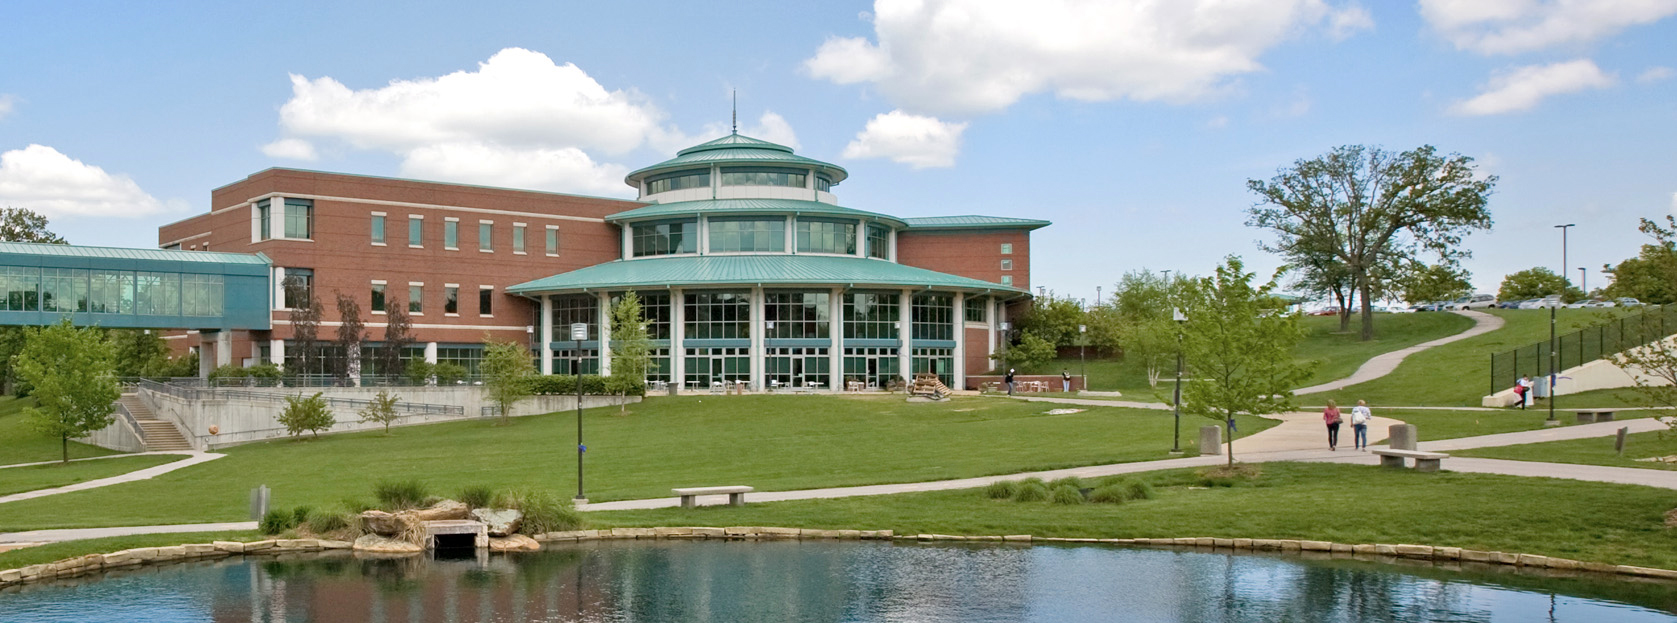 University of Missouri - St. Louis Campus